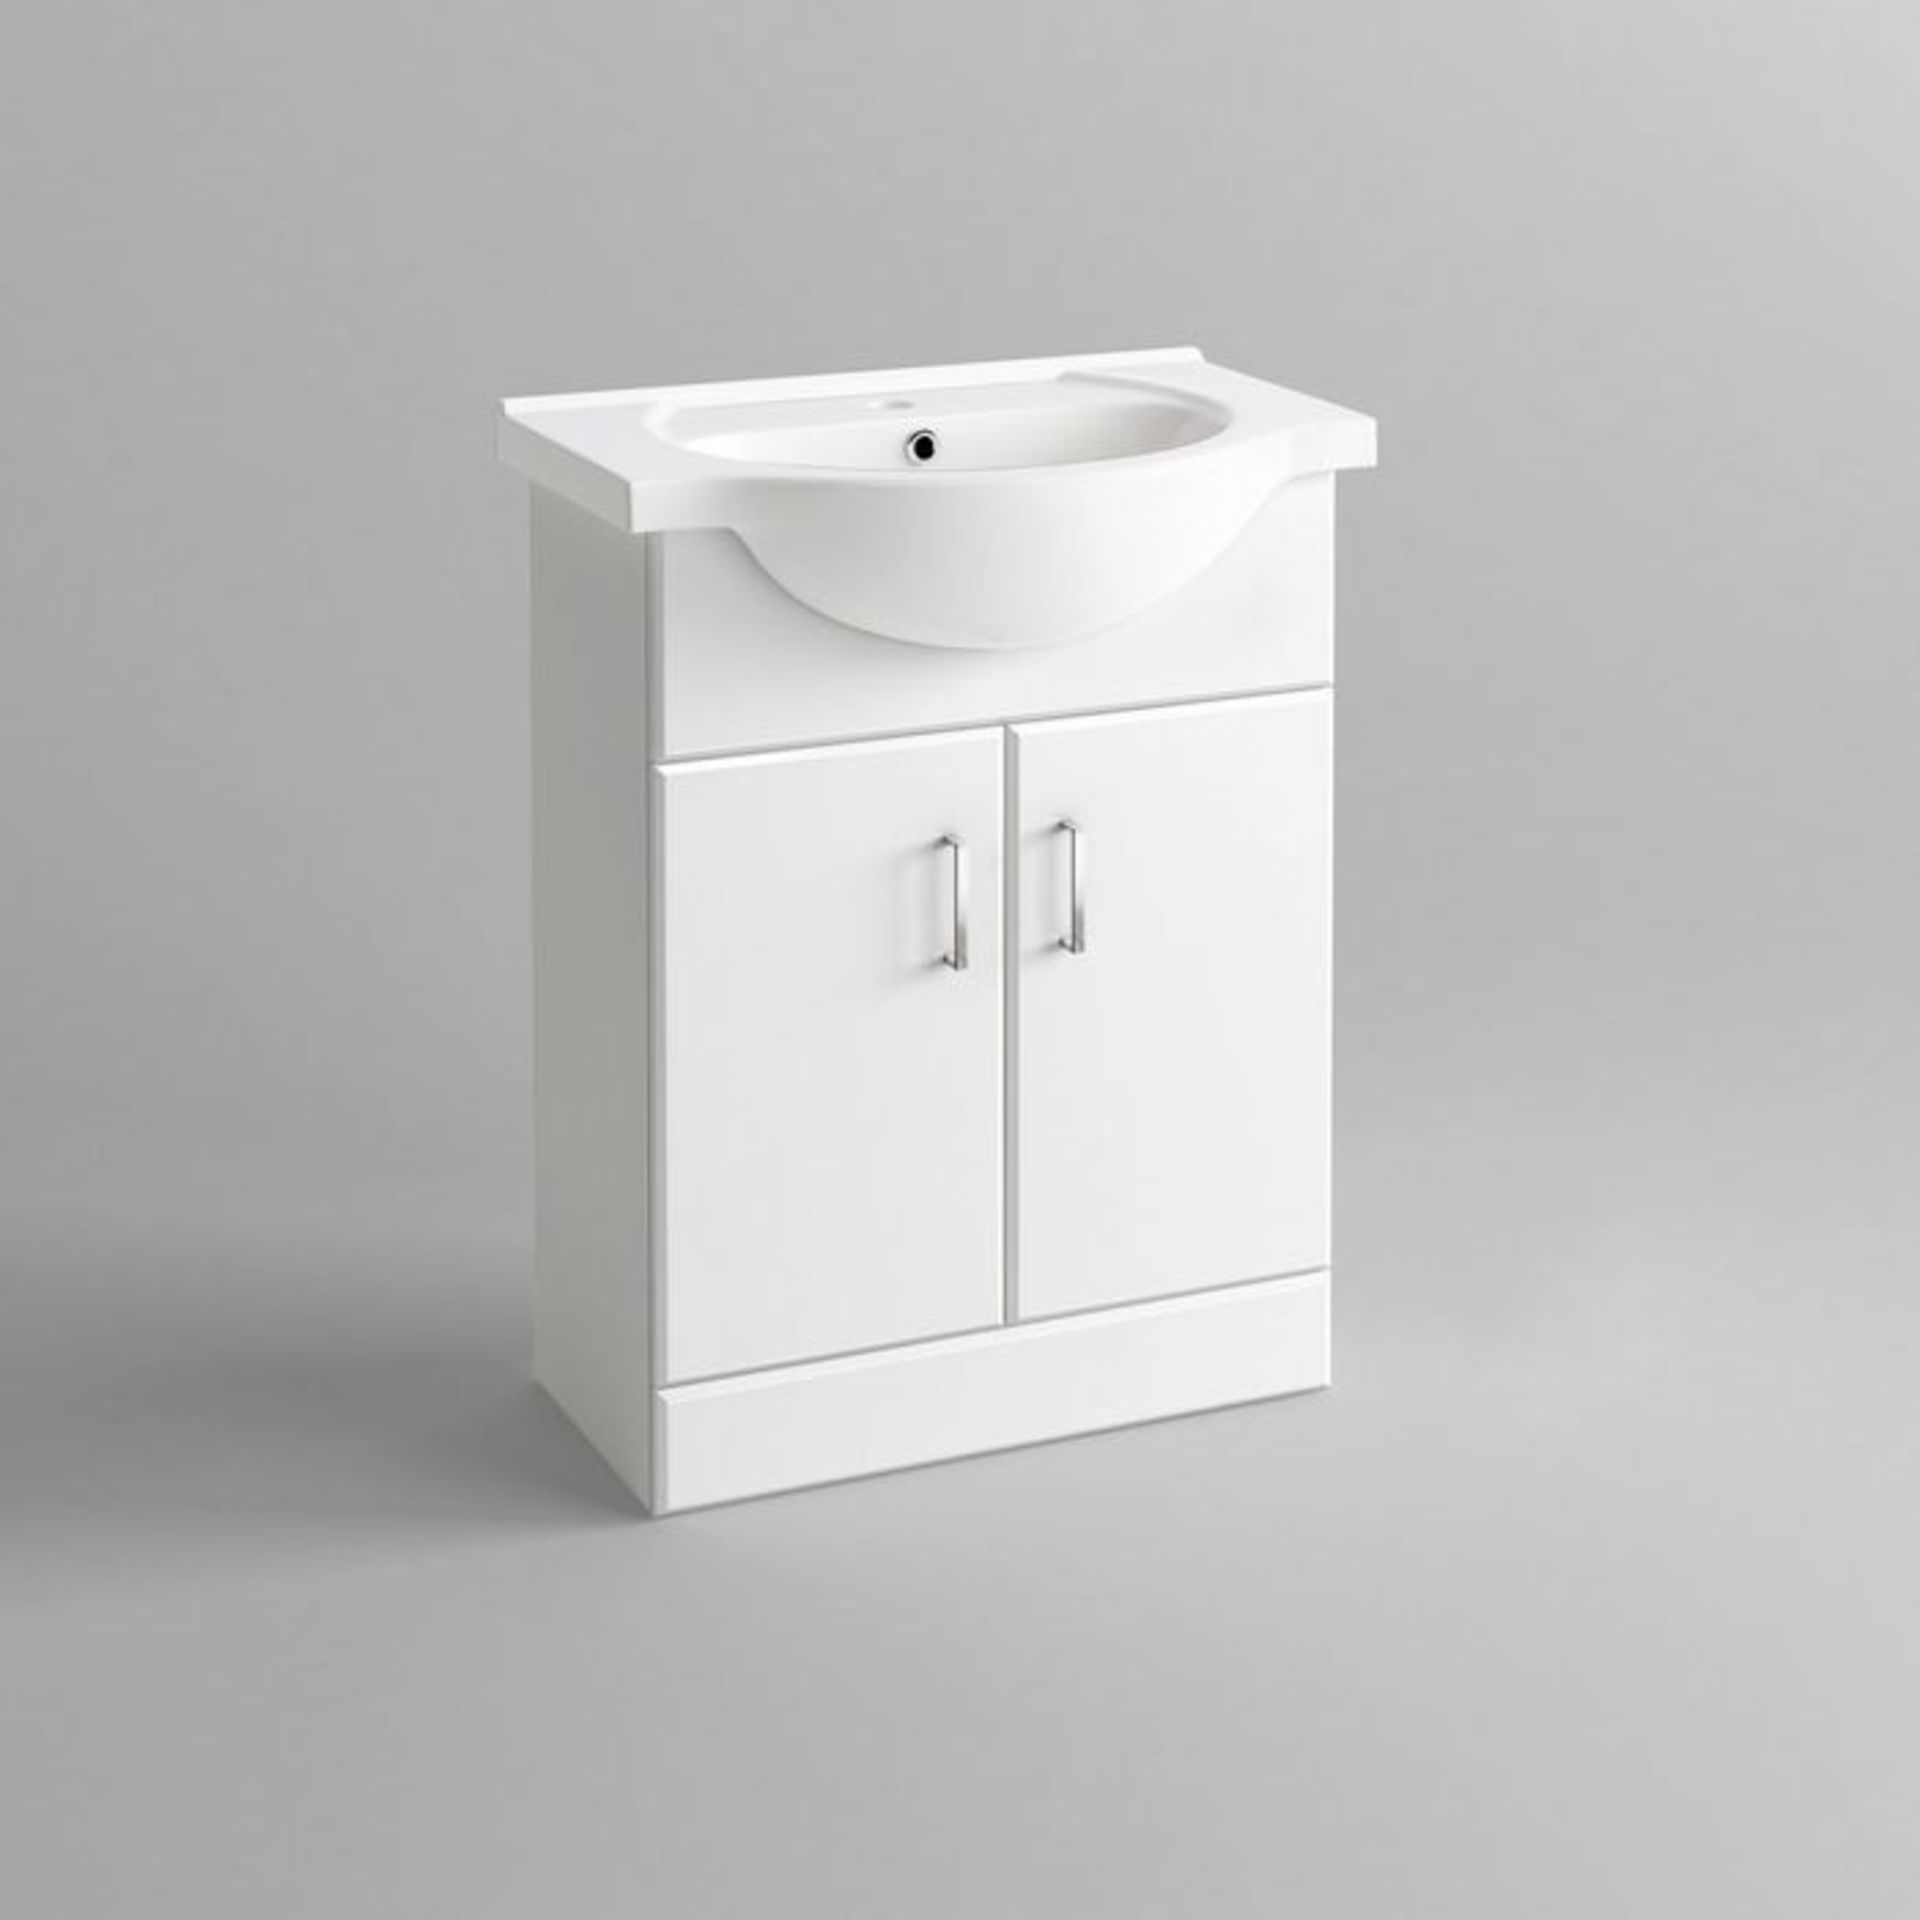 (AL228) 550x300mm Quartz Gloss White Built In Basin Cabinet. Comes complete with basin. Pristine - Image 5 of 6